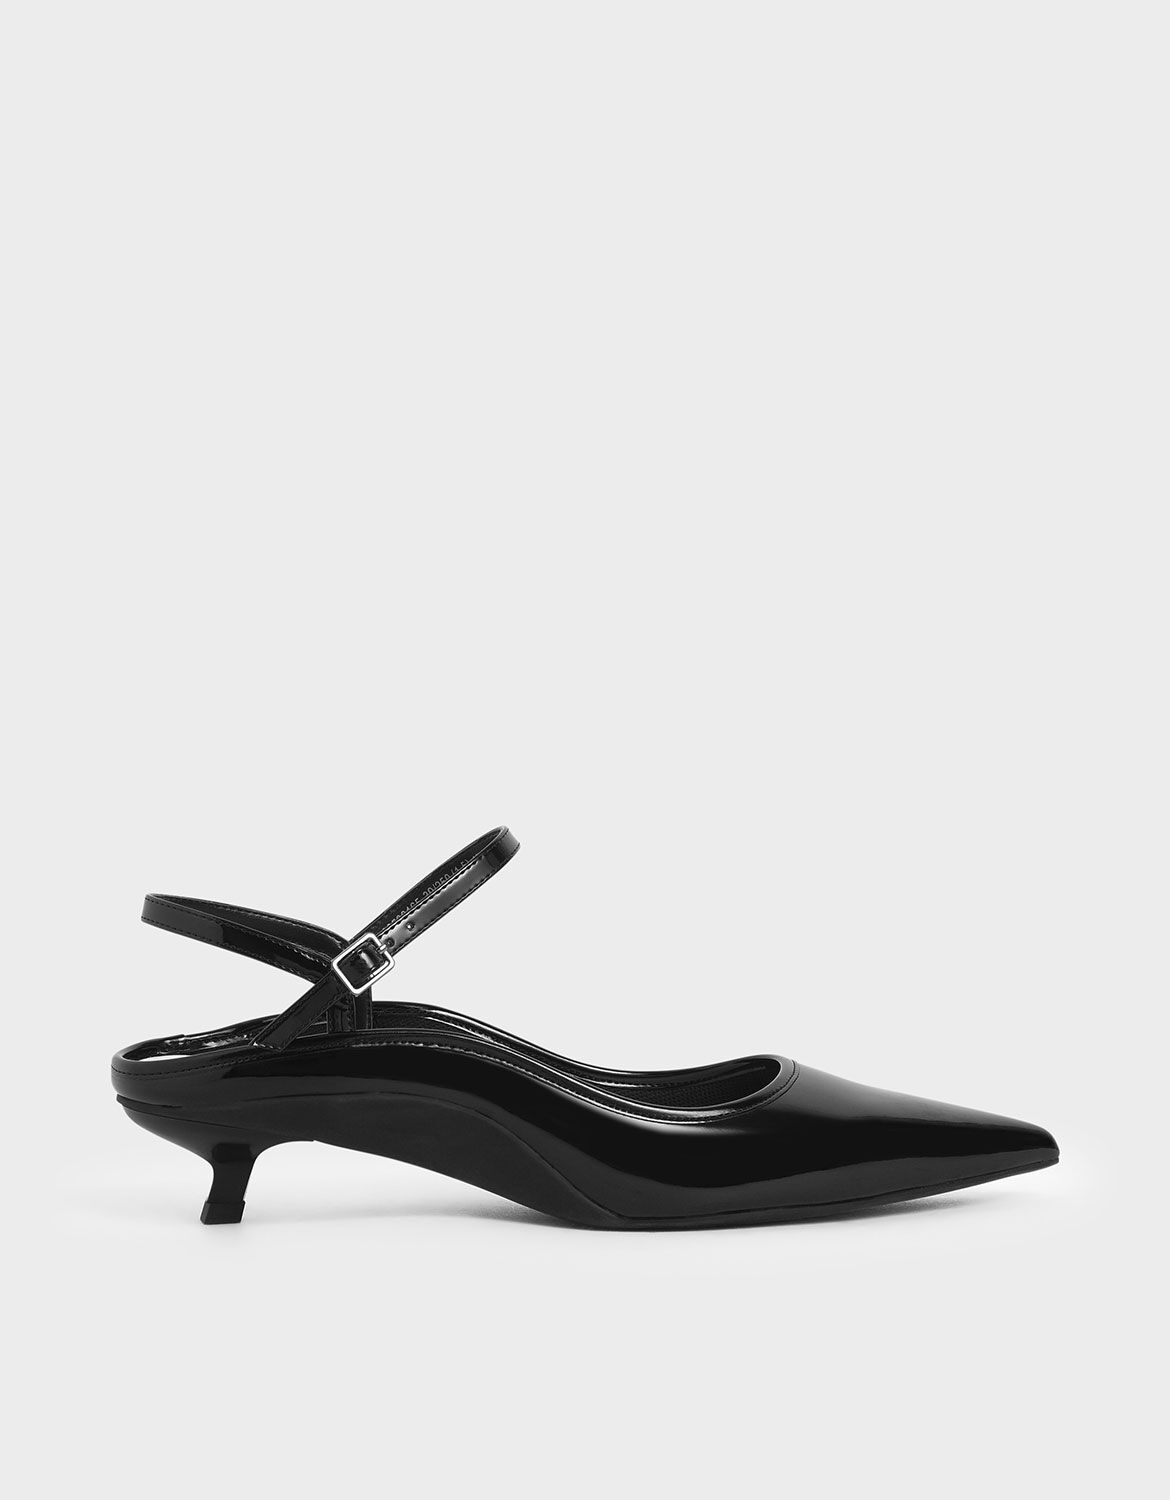 black patent heels ankle strap